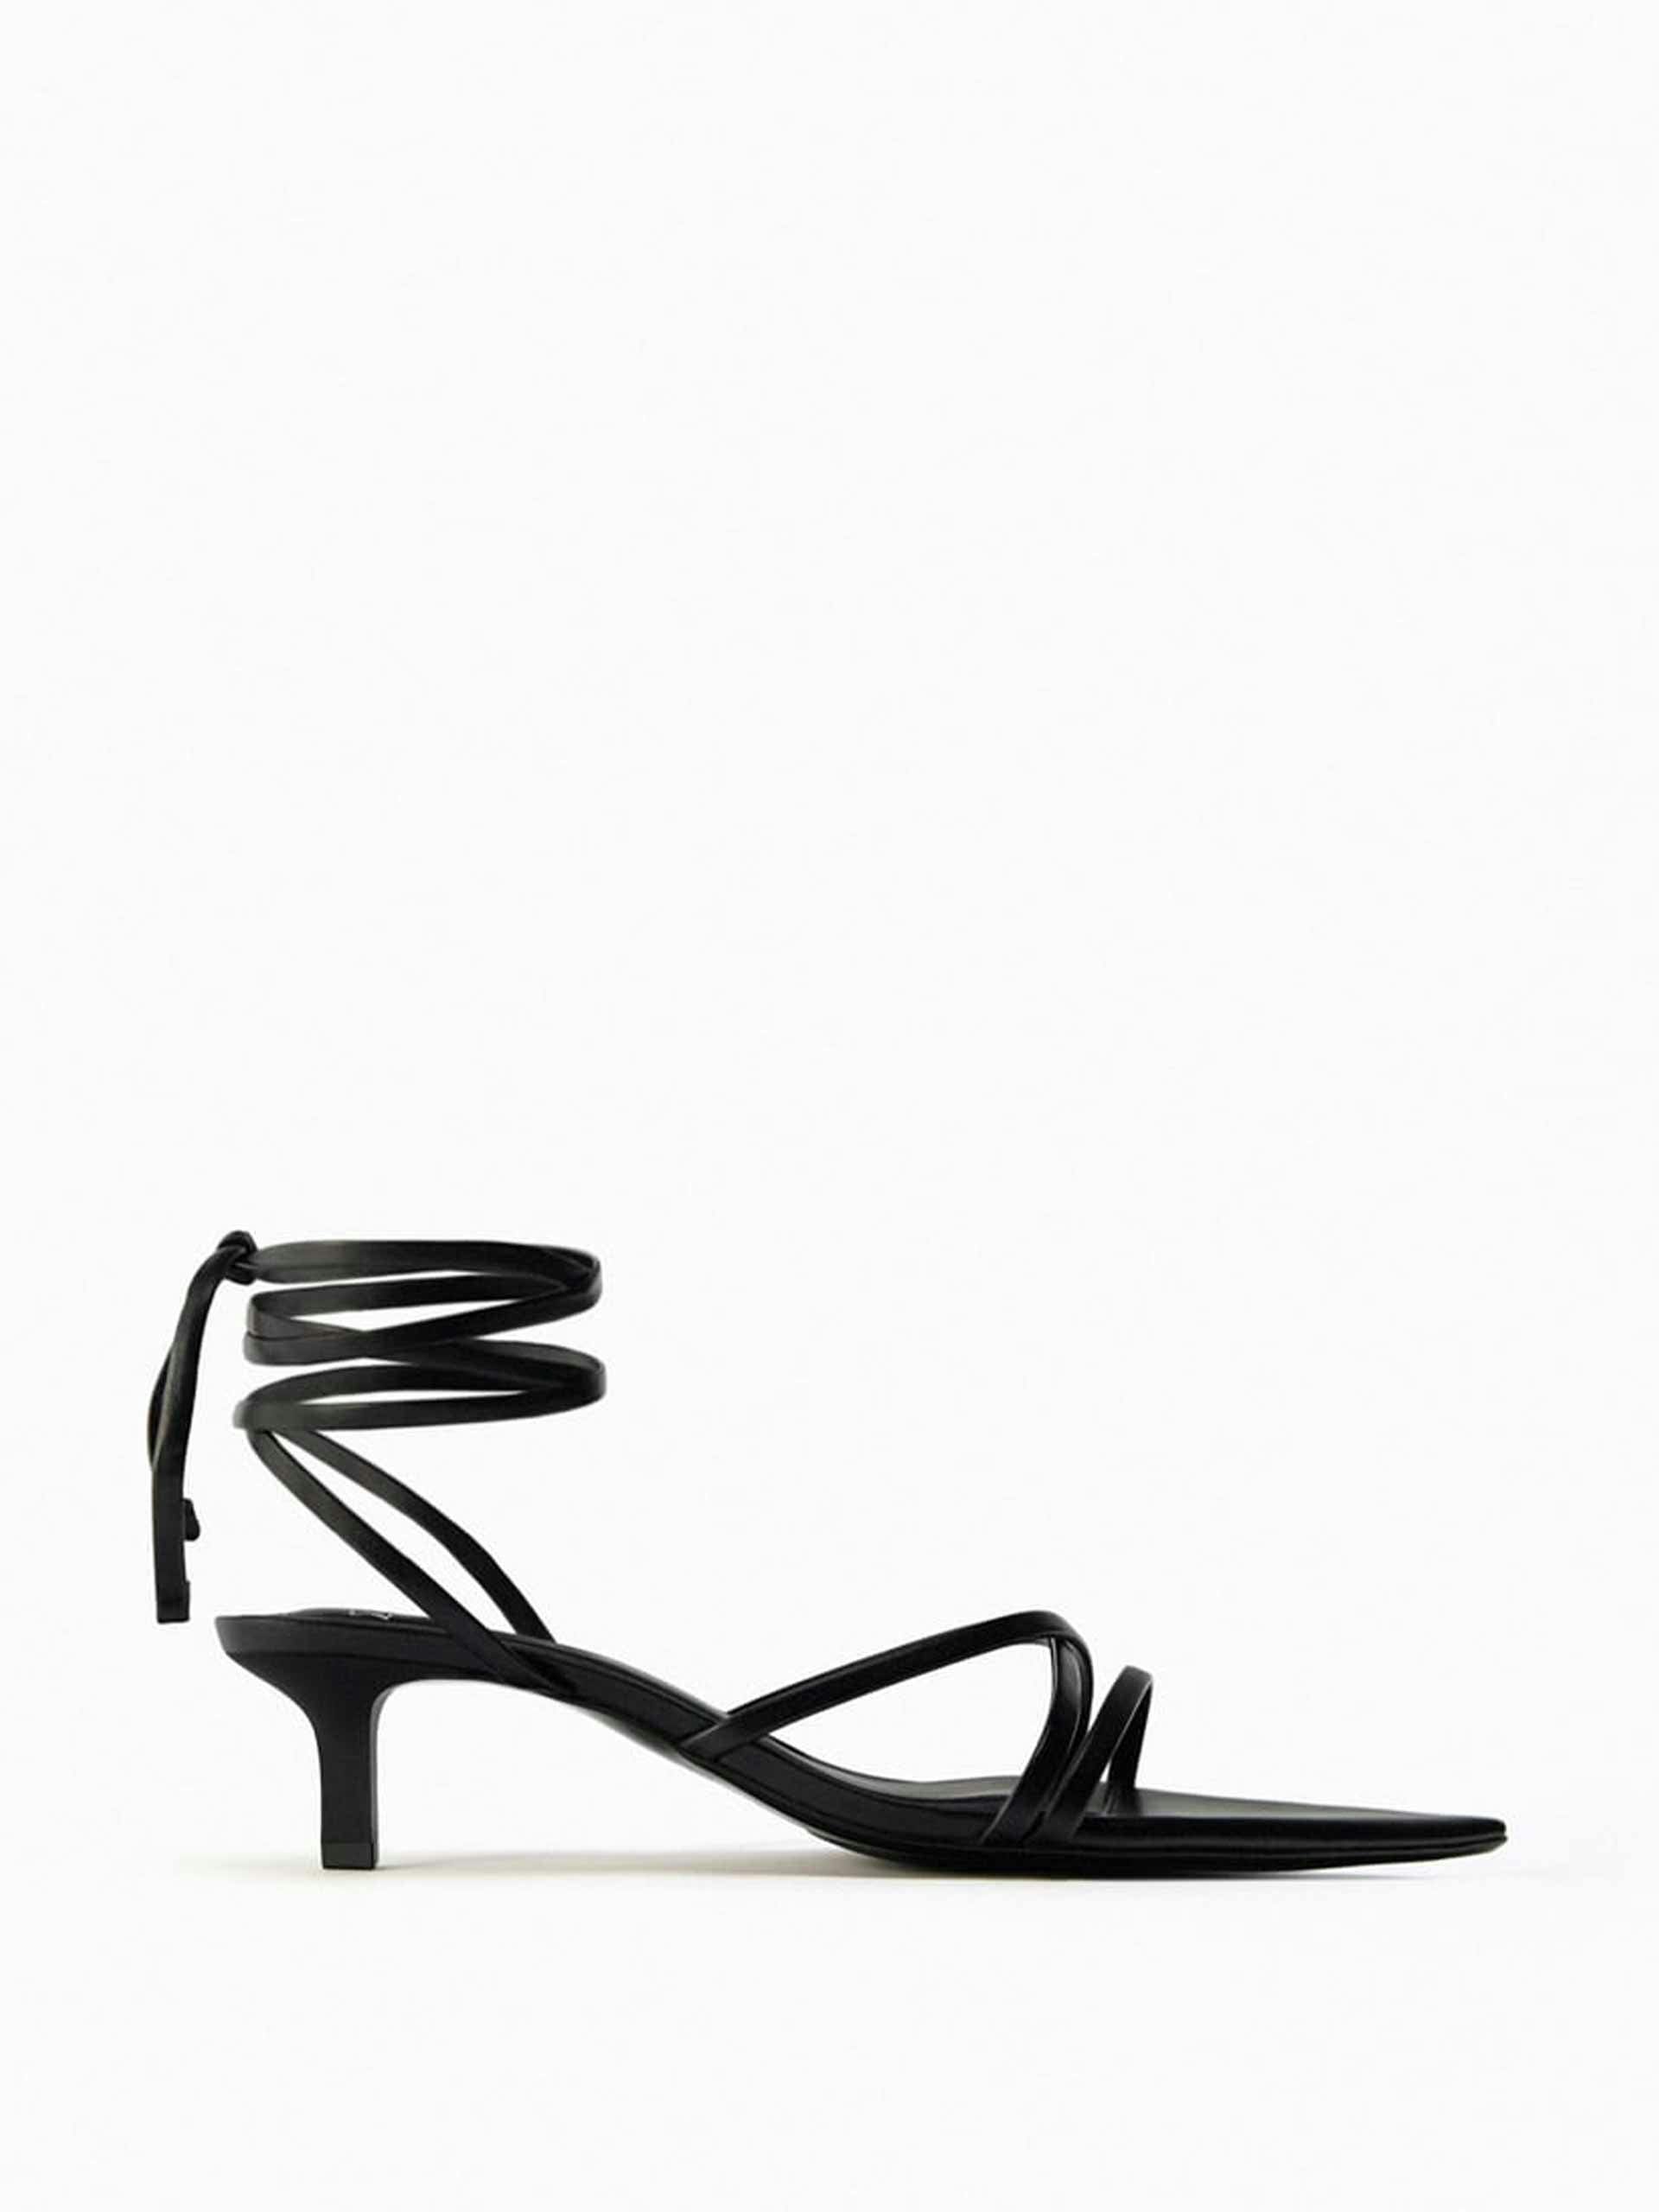 Black lace-up heeled sandals